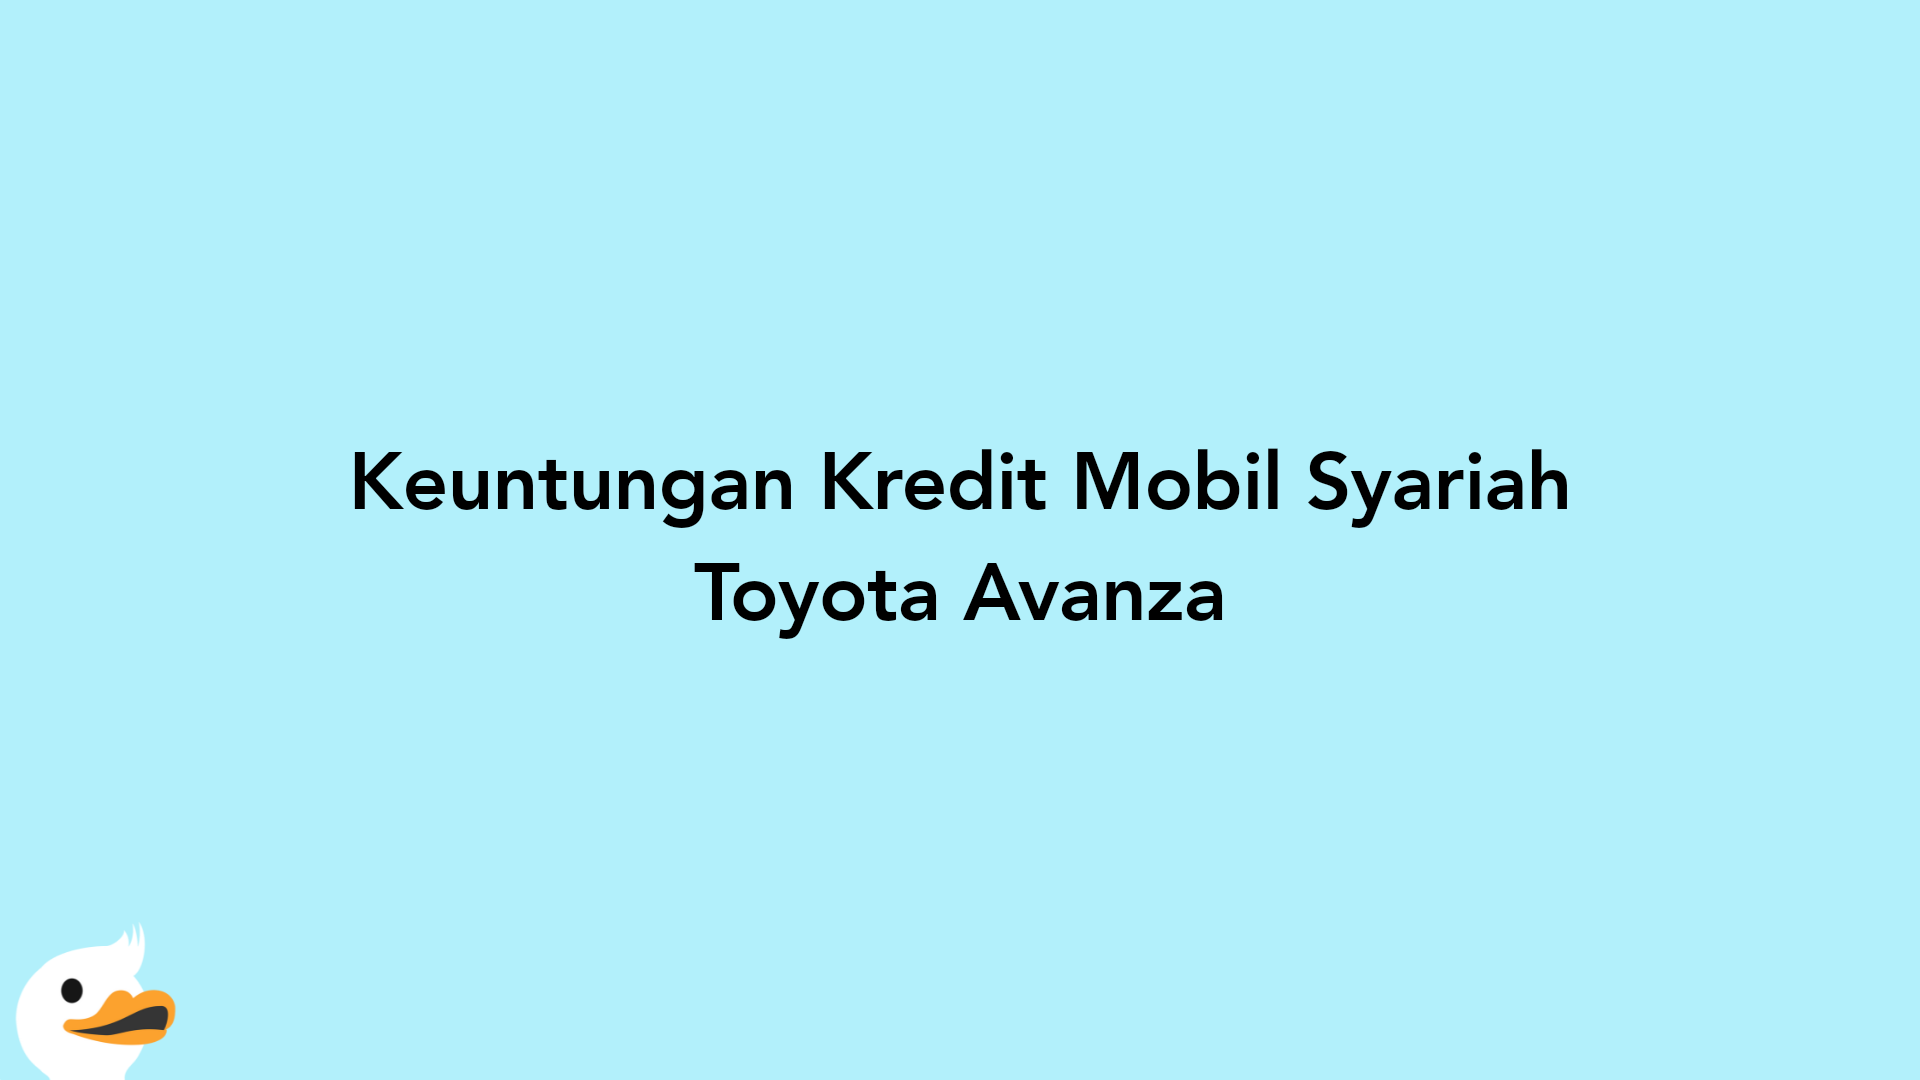 Keuntungan Kredit Mobil Syariah Toyota Avanza